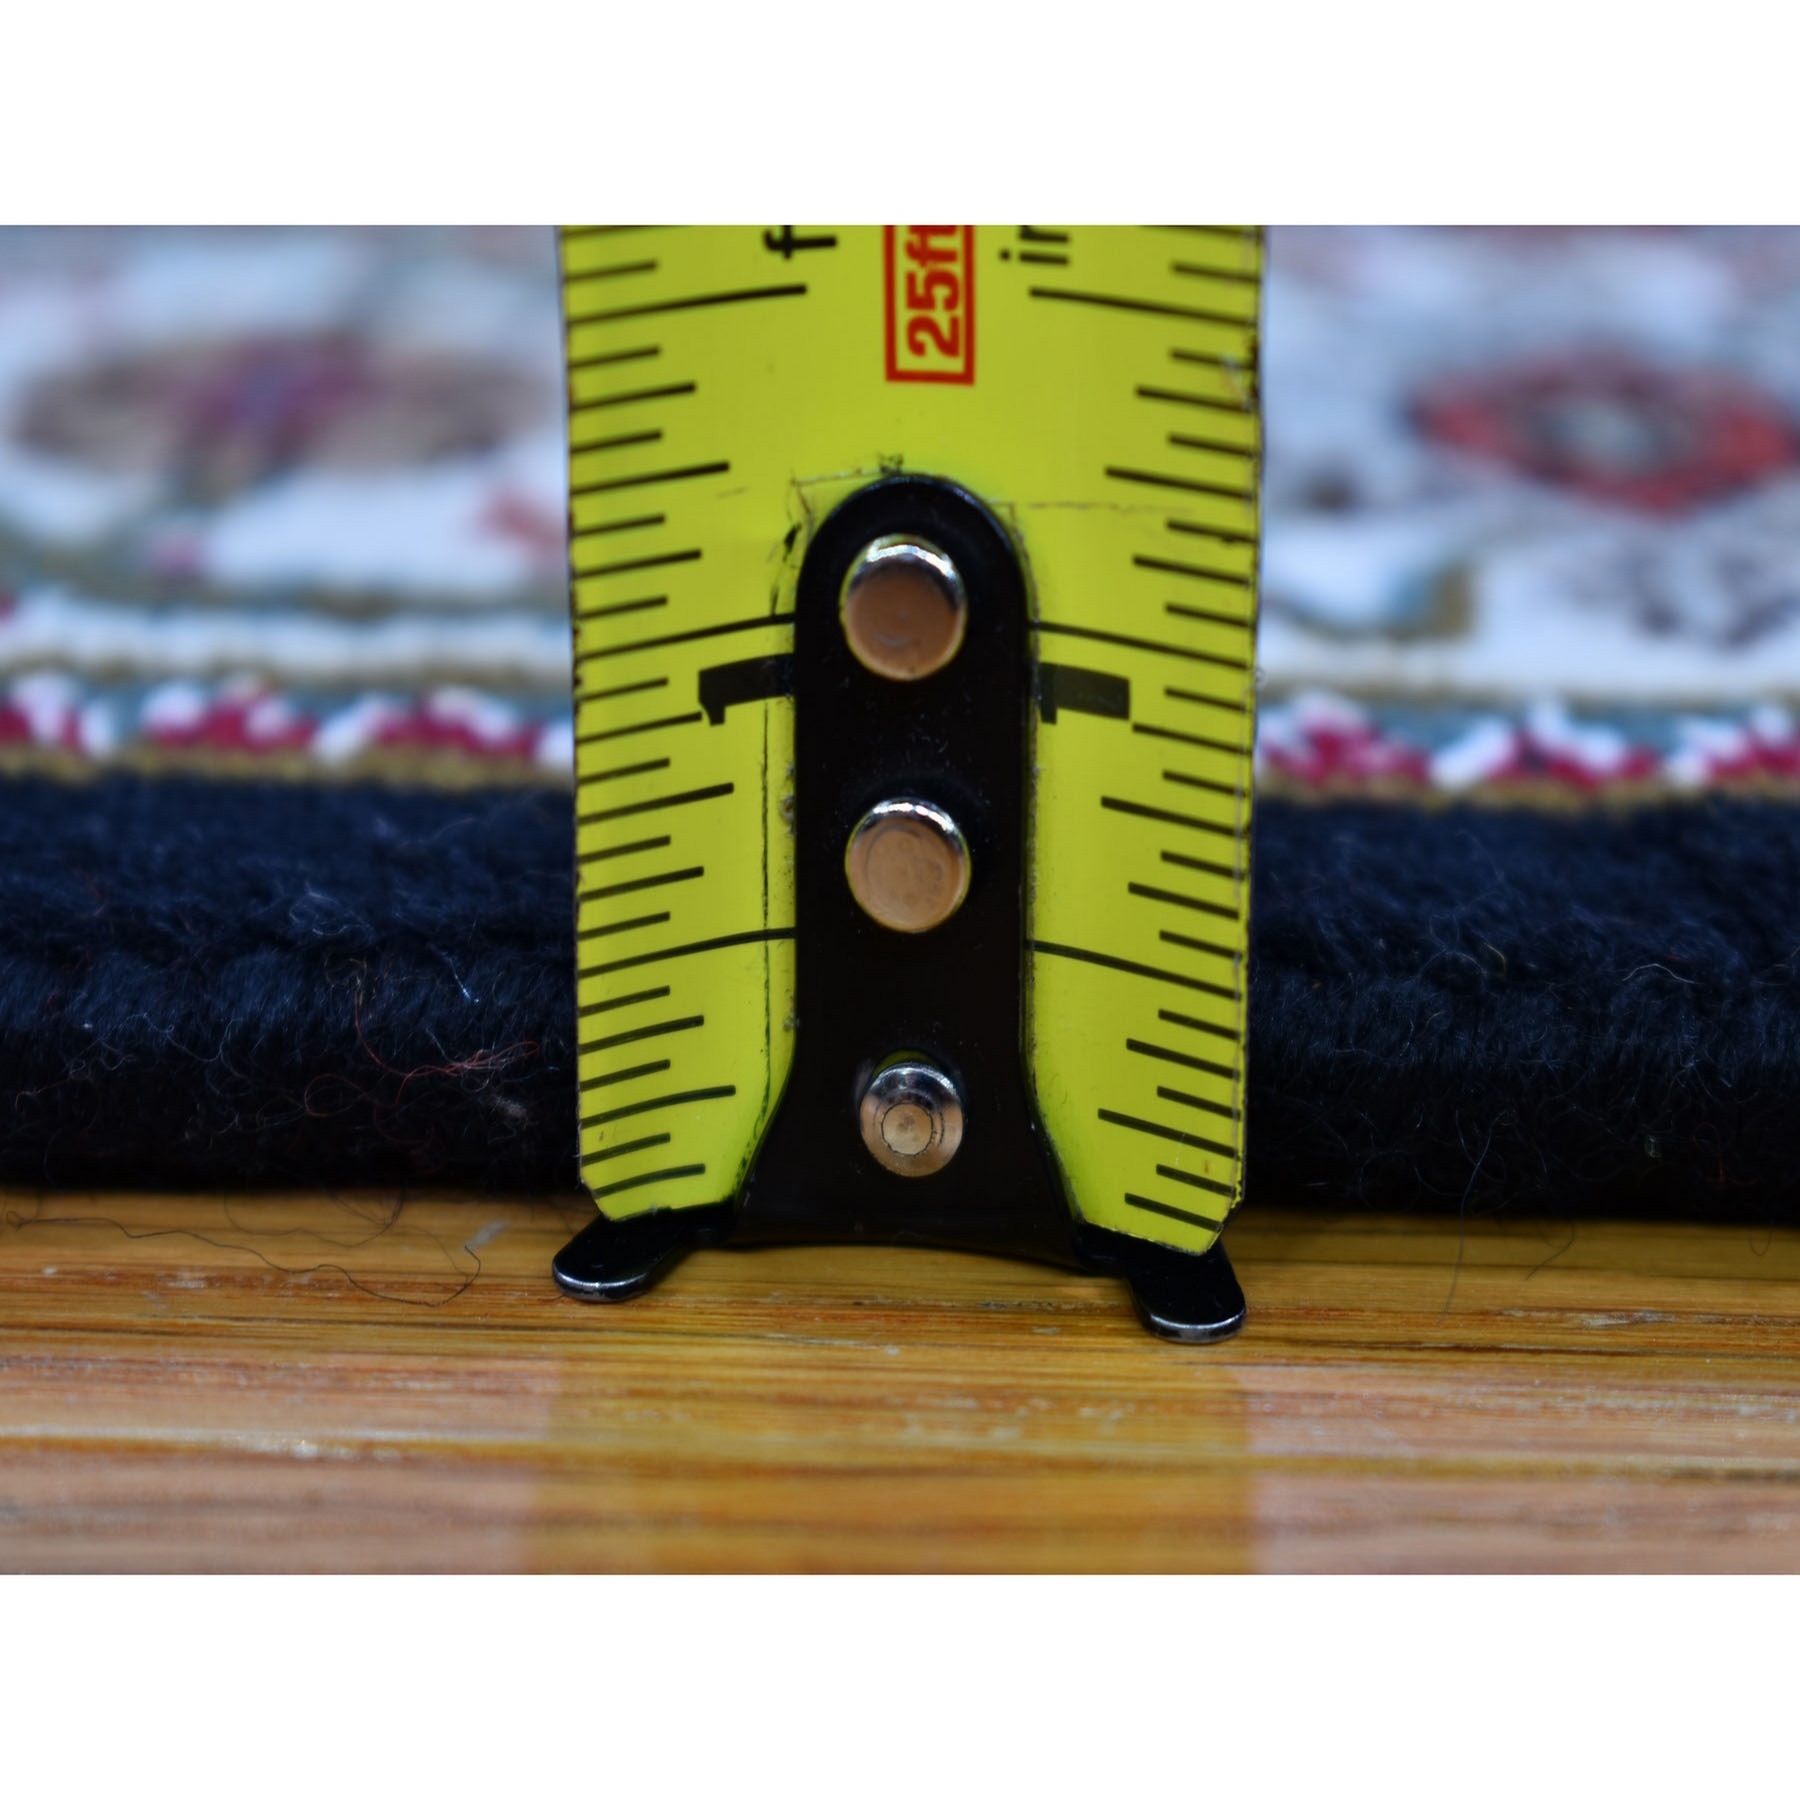 2-7 x8-4  Black Tabriz Mahi Wool and Silk Runner Hand Knotted Oriental Rug 